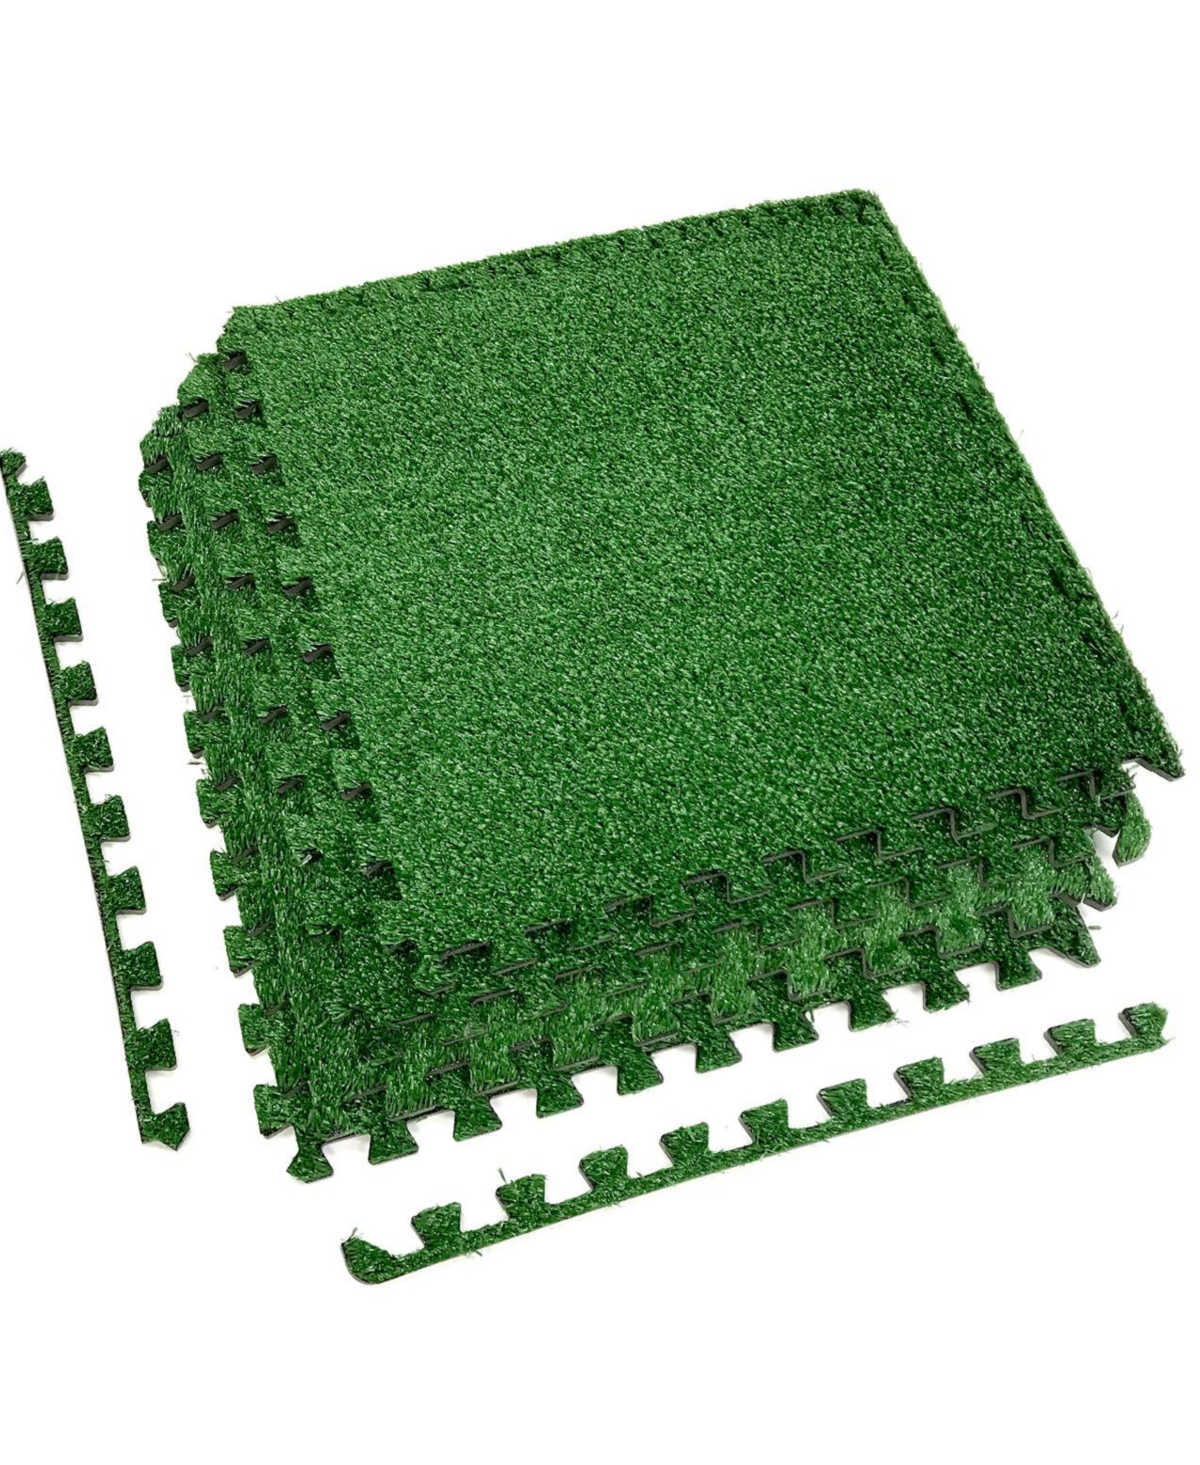 Interlocking Floor Mat Grass 12 Pieces and Borders - Green